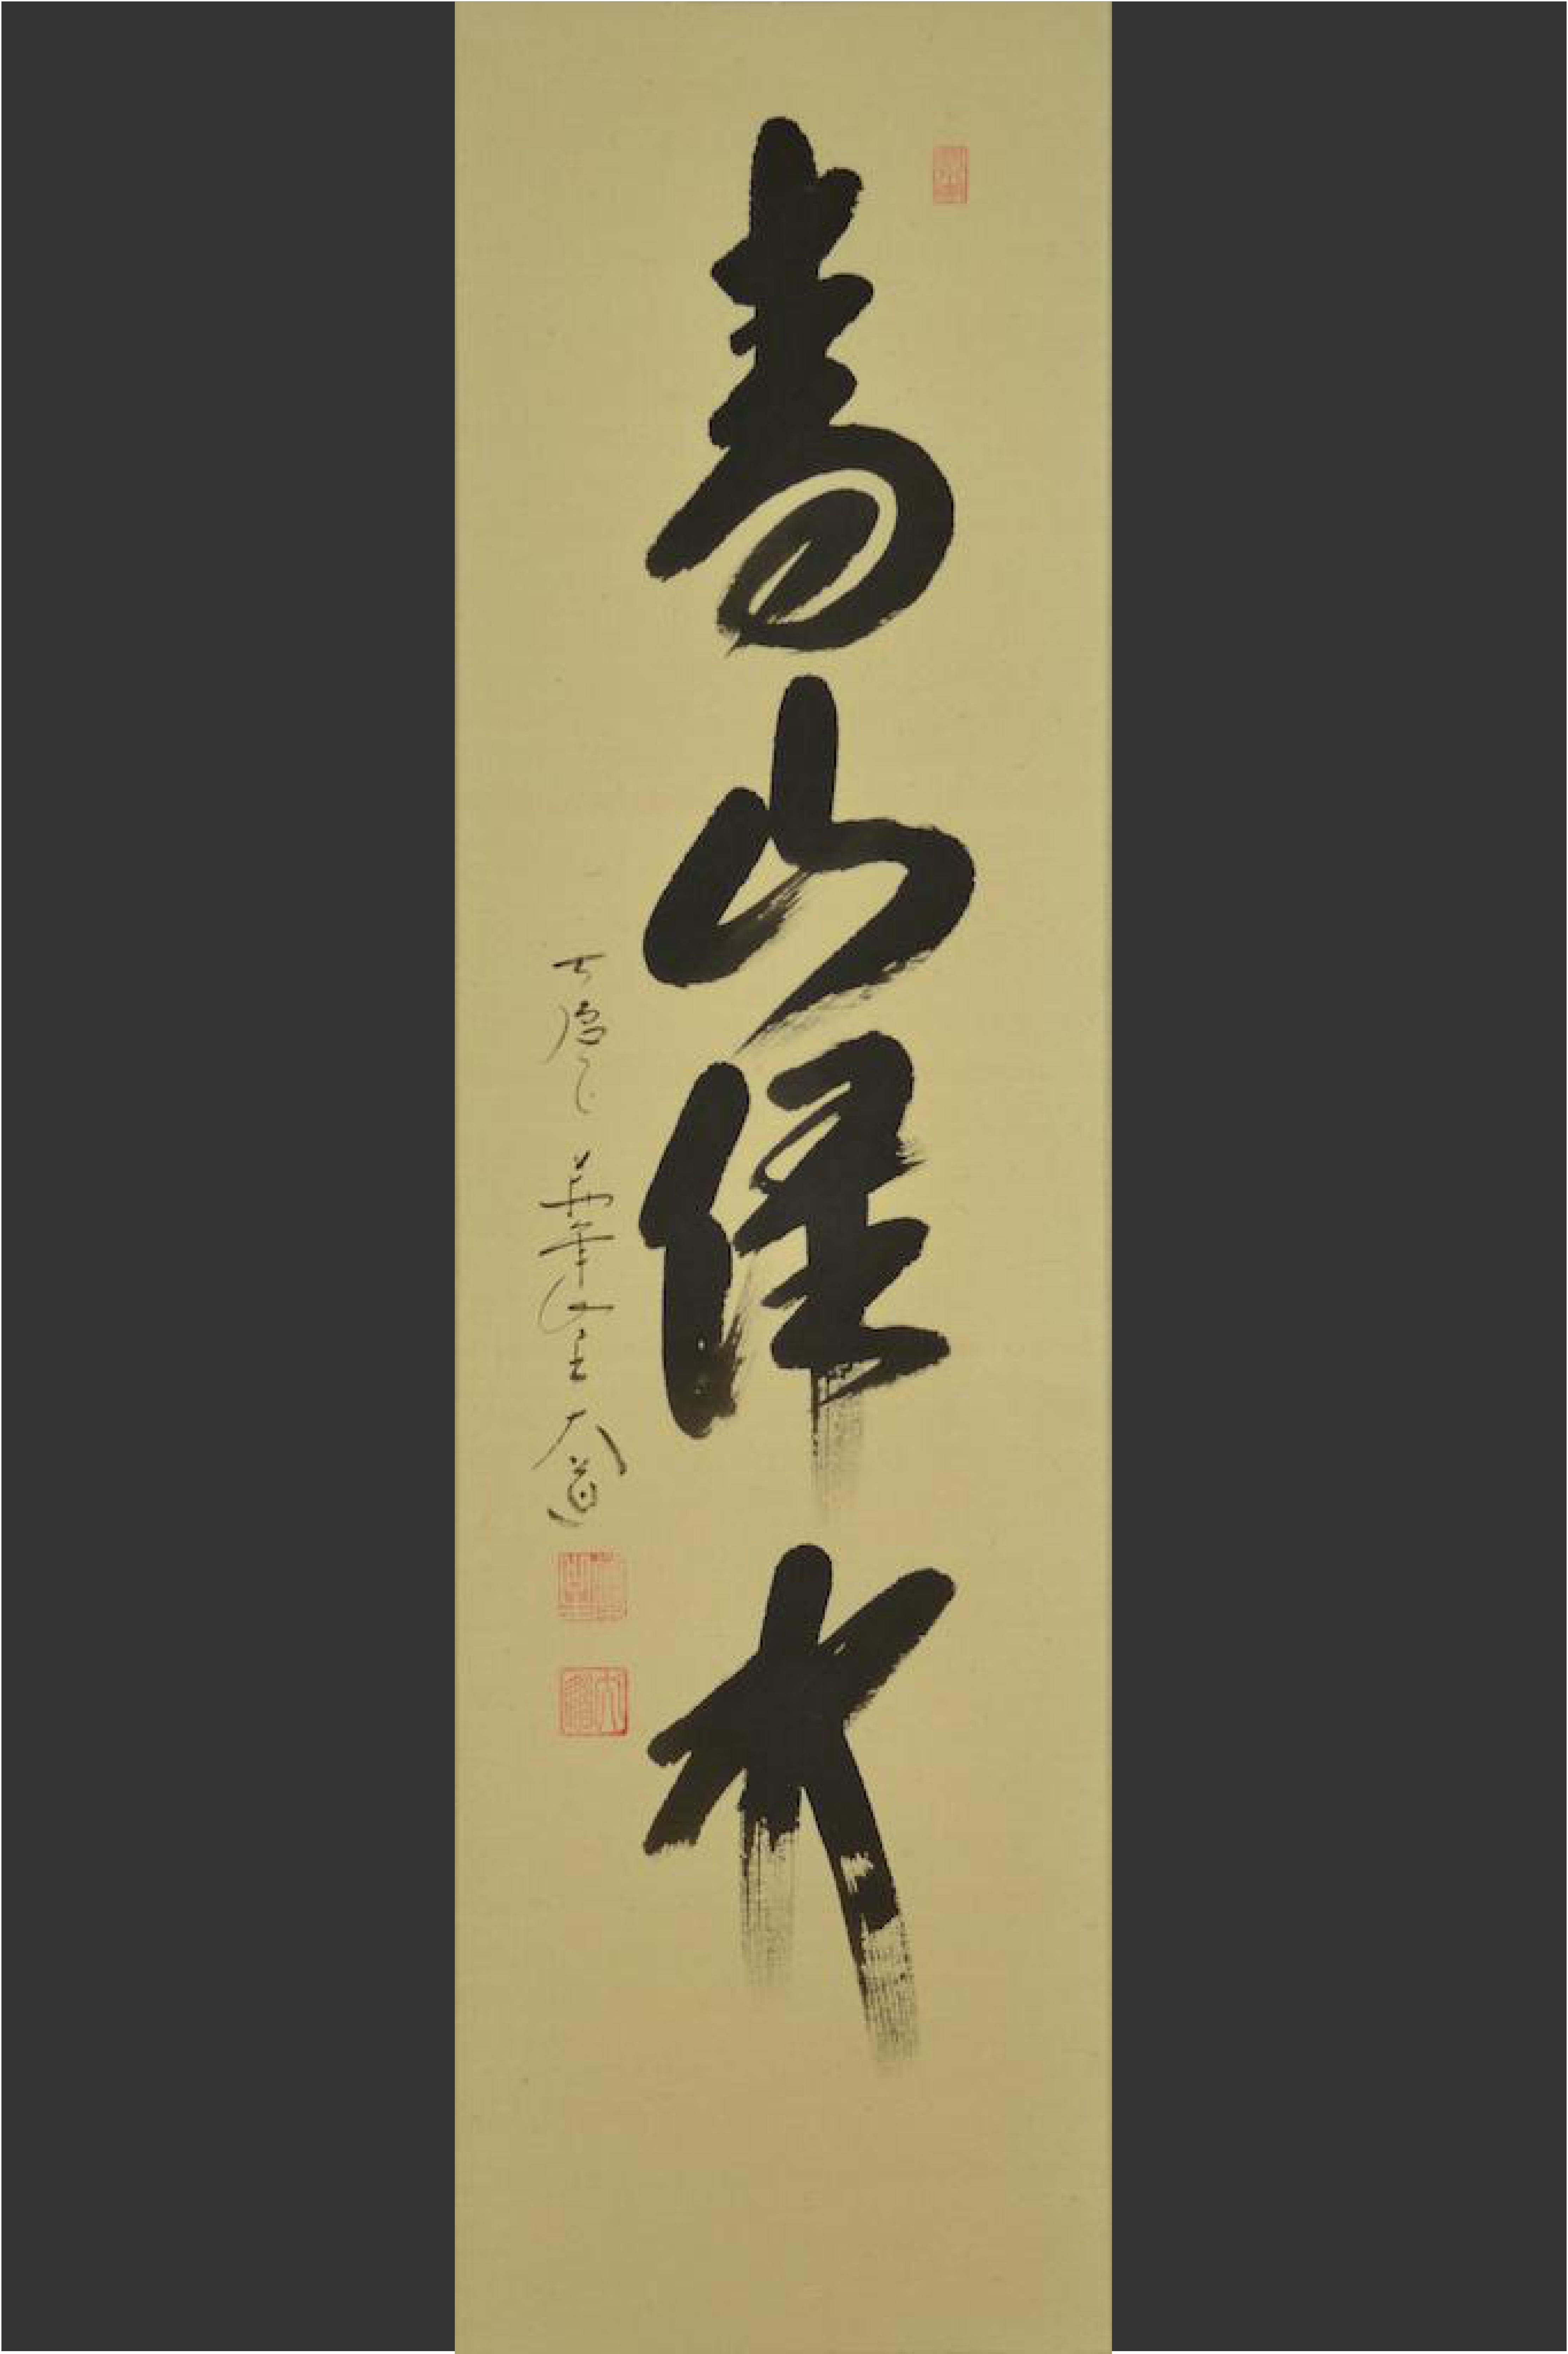 Expressive calligraphy by Zen master Nishigaki Daido (1942). The four characters 'sei zan roku sui ????' meaning 